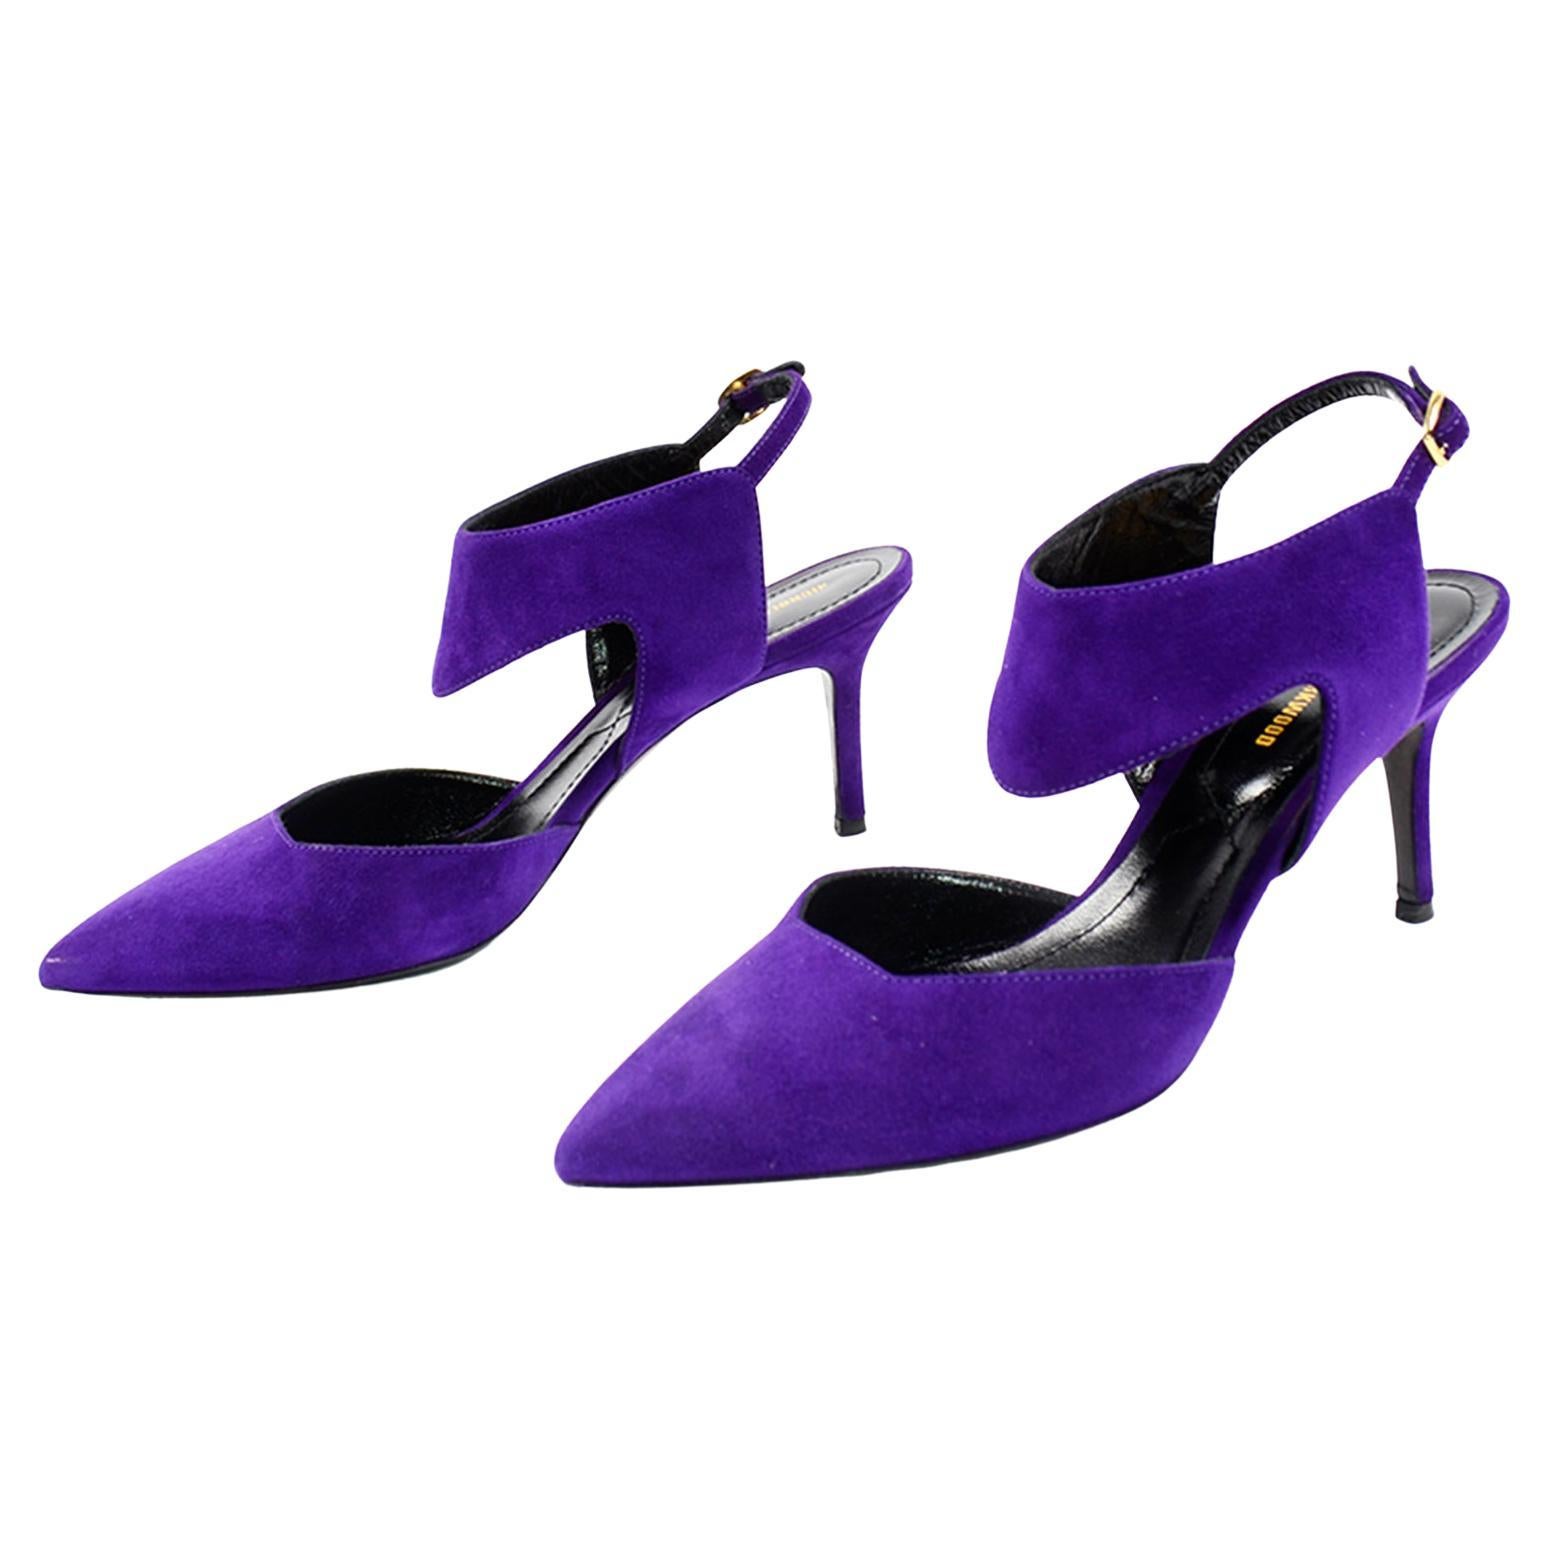 Nicholas Kirkwood Purple Suede Slingback Pointed Toe Shoes With Heels